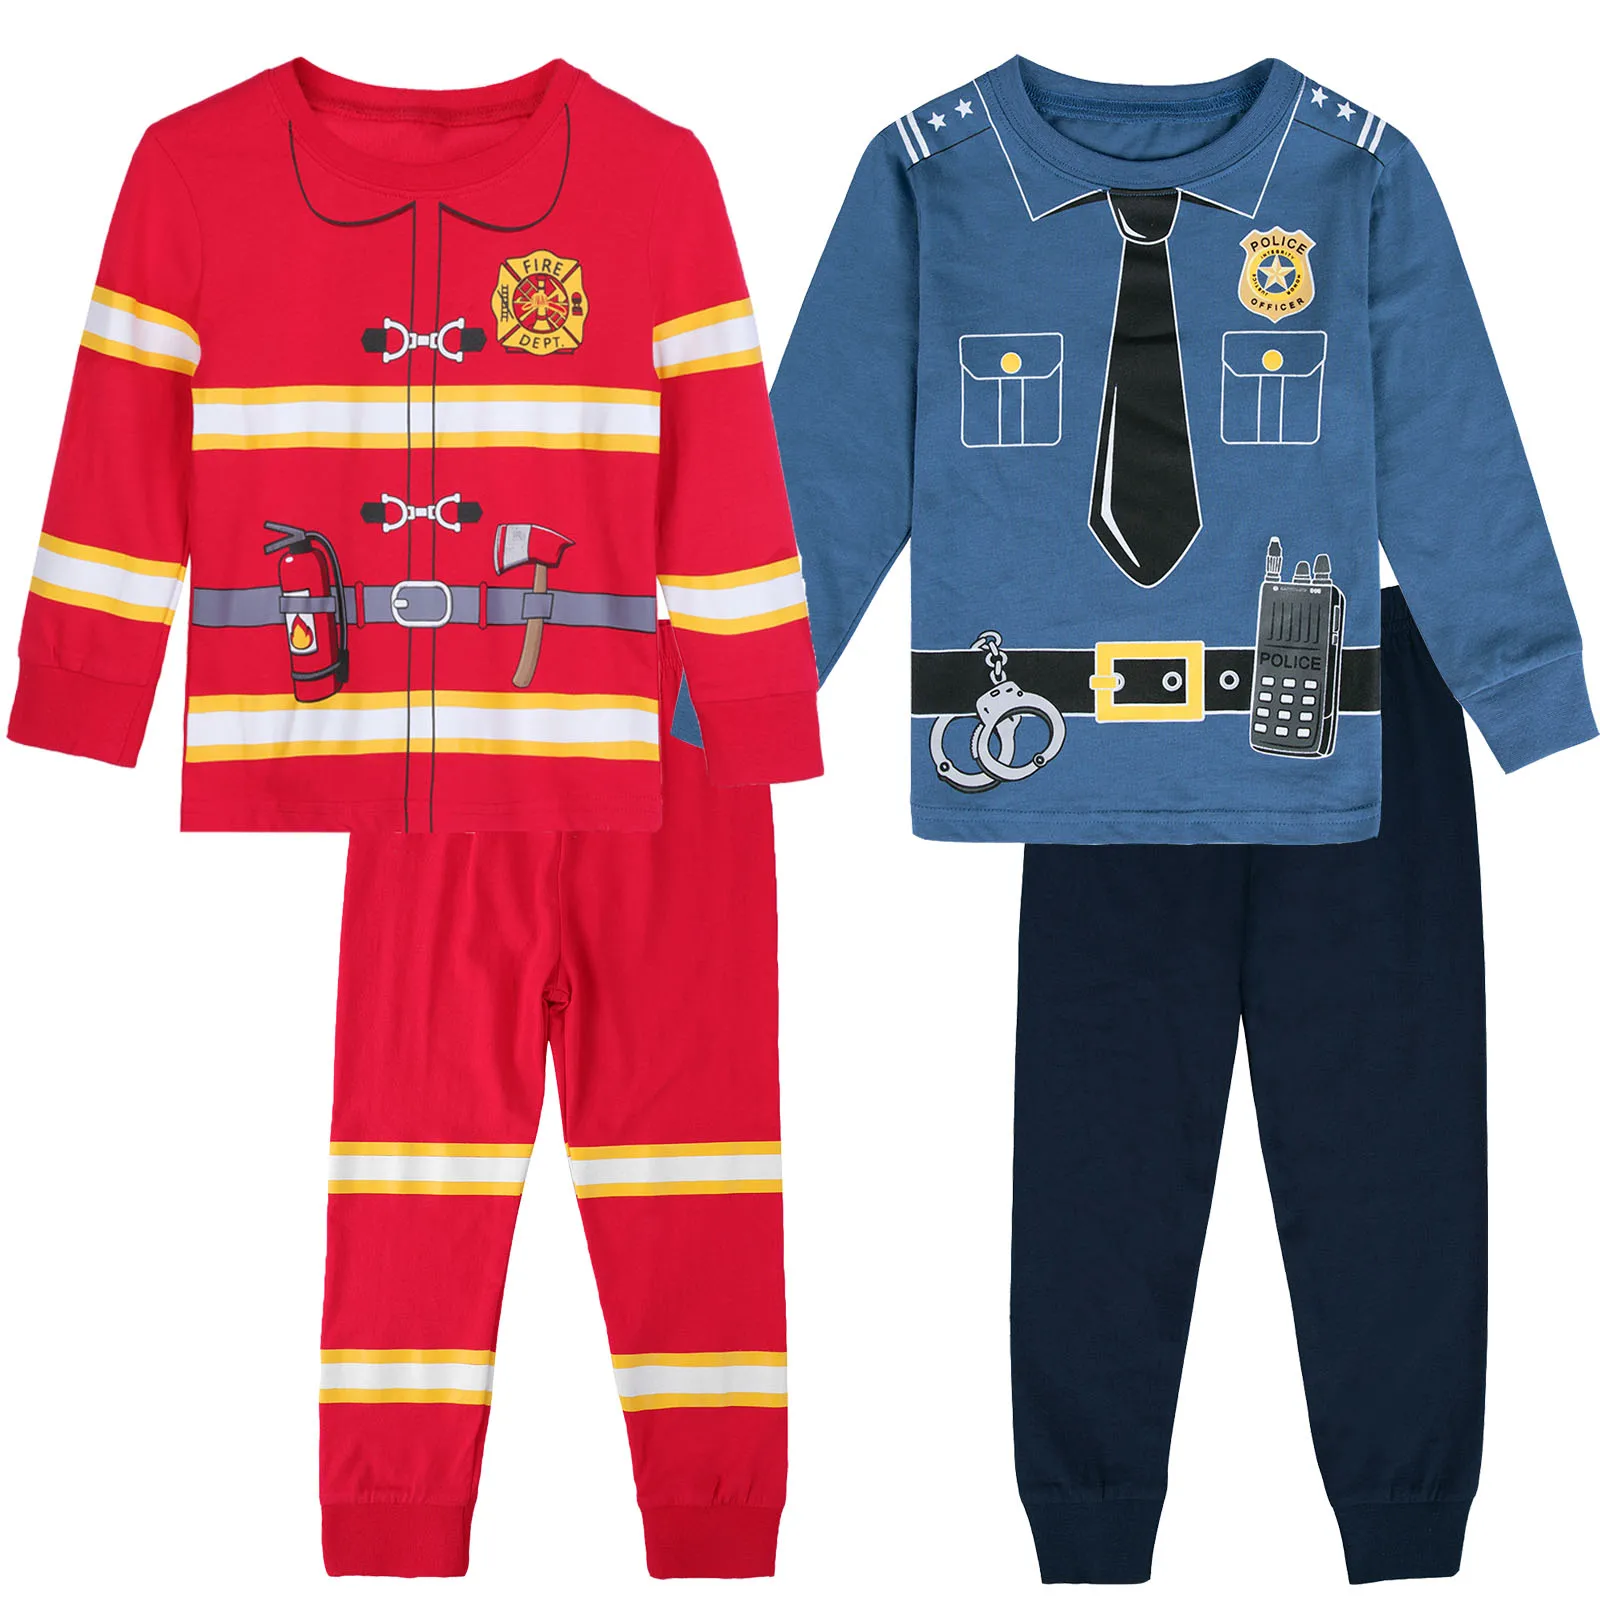 Two Sets Pajamas for Kids Boy Gift Sleepwear Children New Year Festival Nightwear Toddler Christmas Elf Santa Claus Pjs Clothes